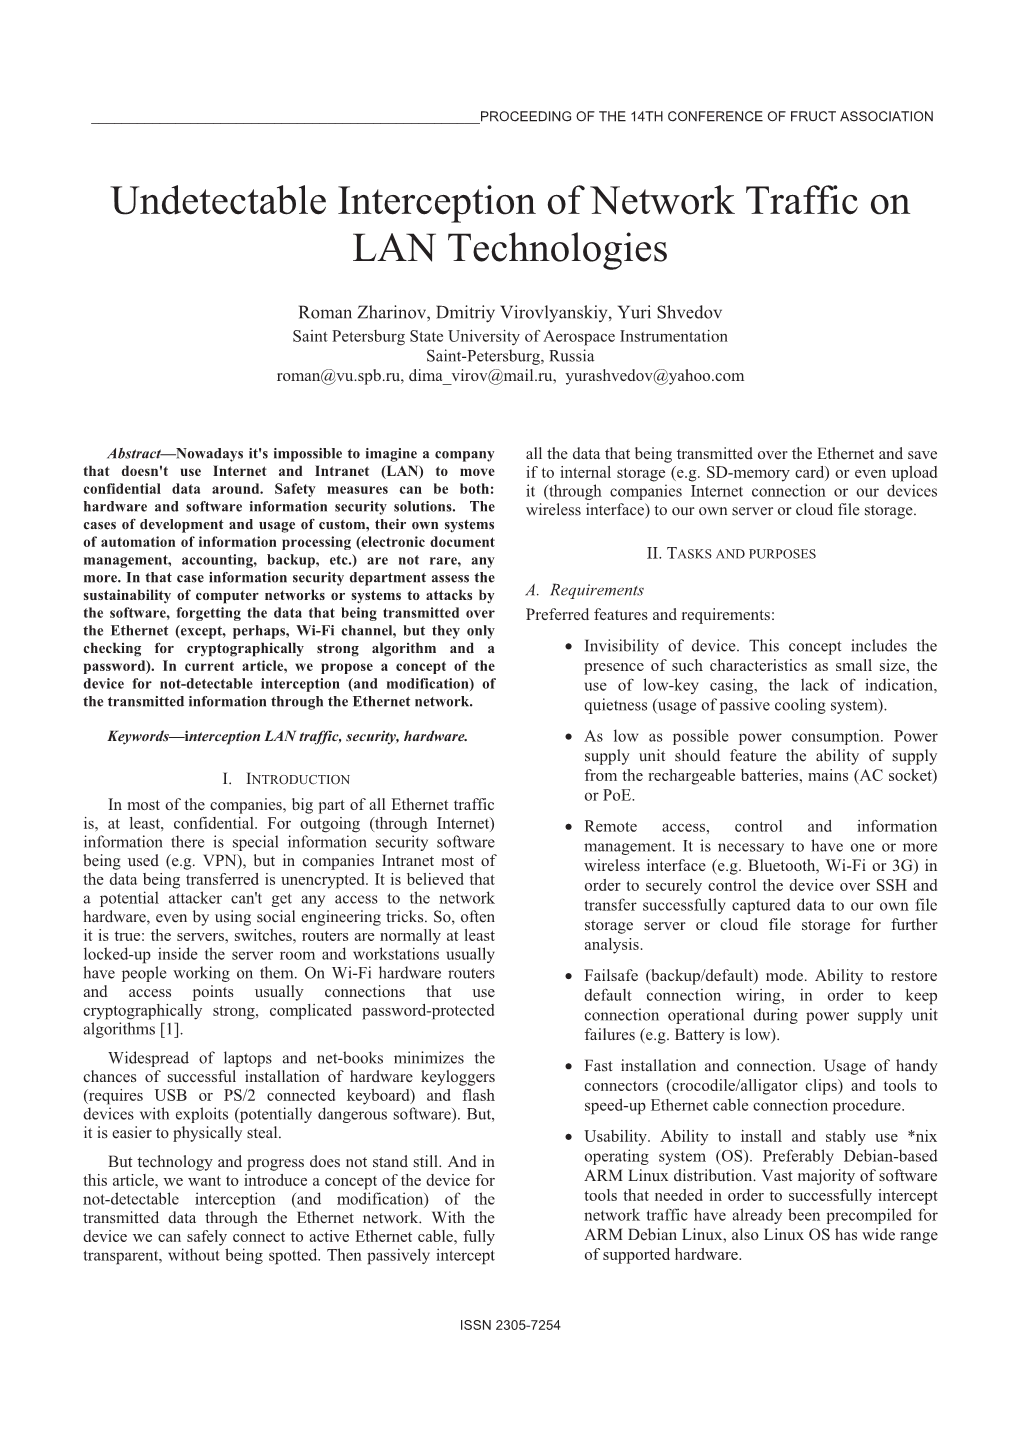 Undetectable Interception of Network Traffic on LAN Technologies